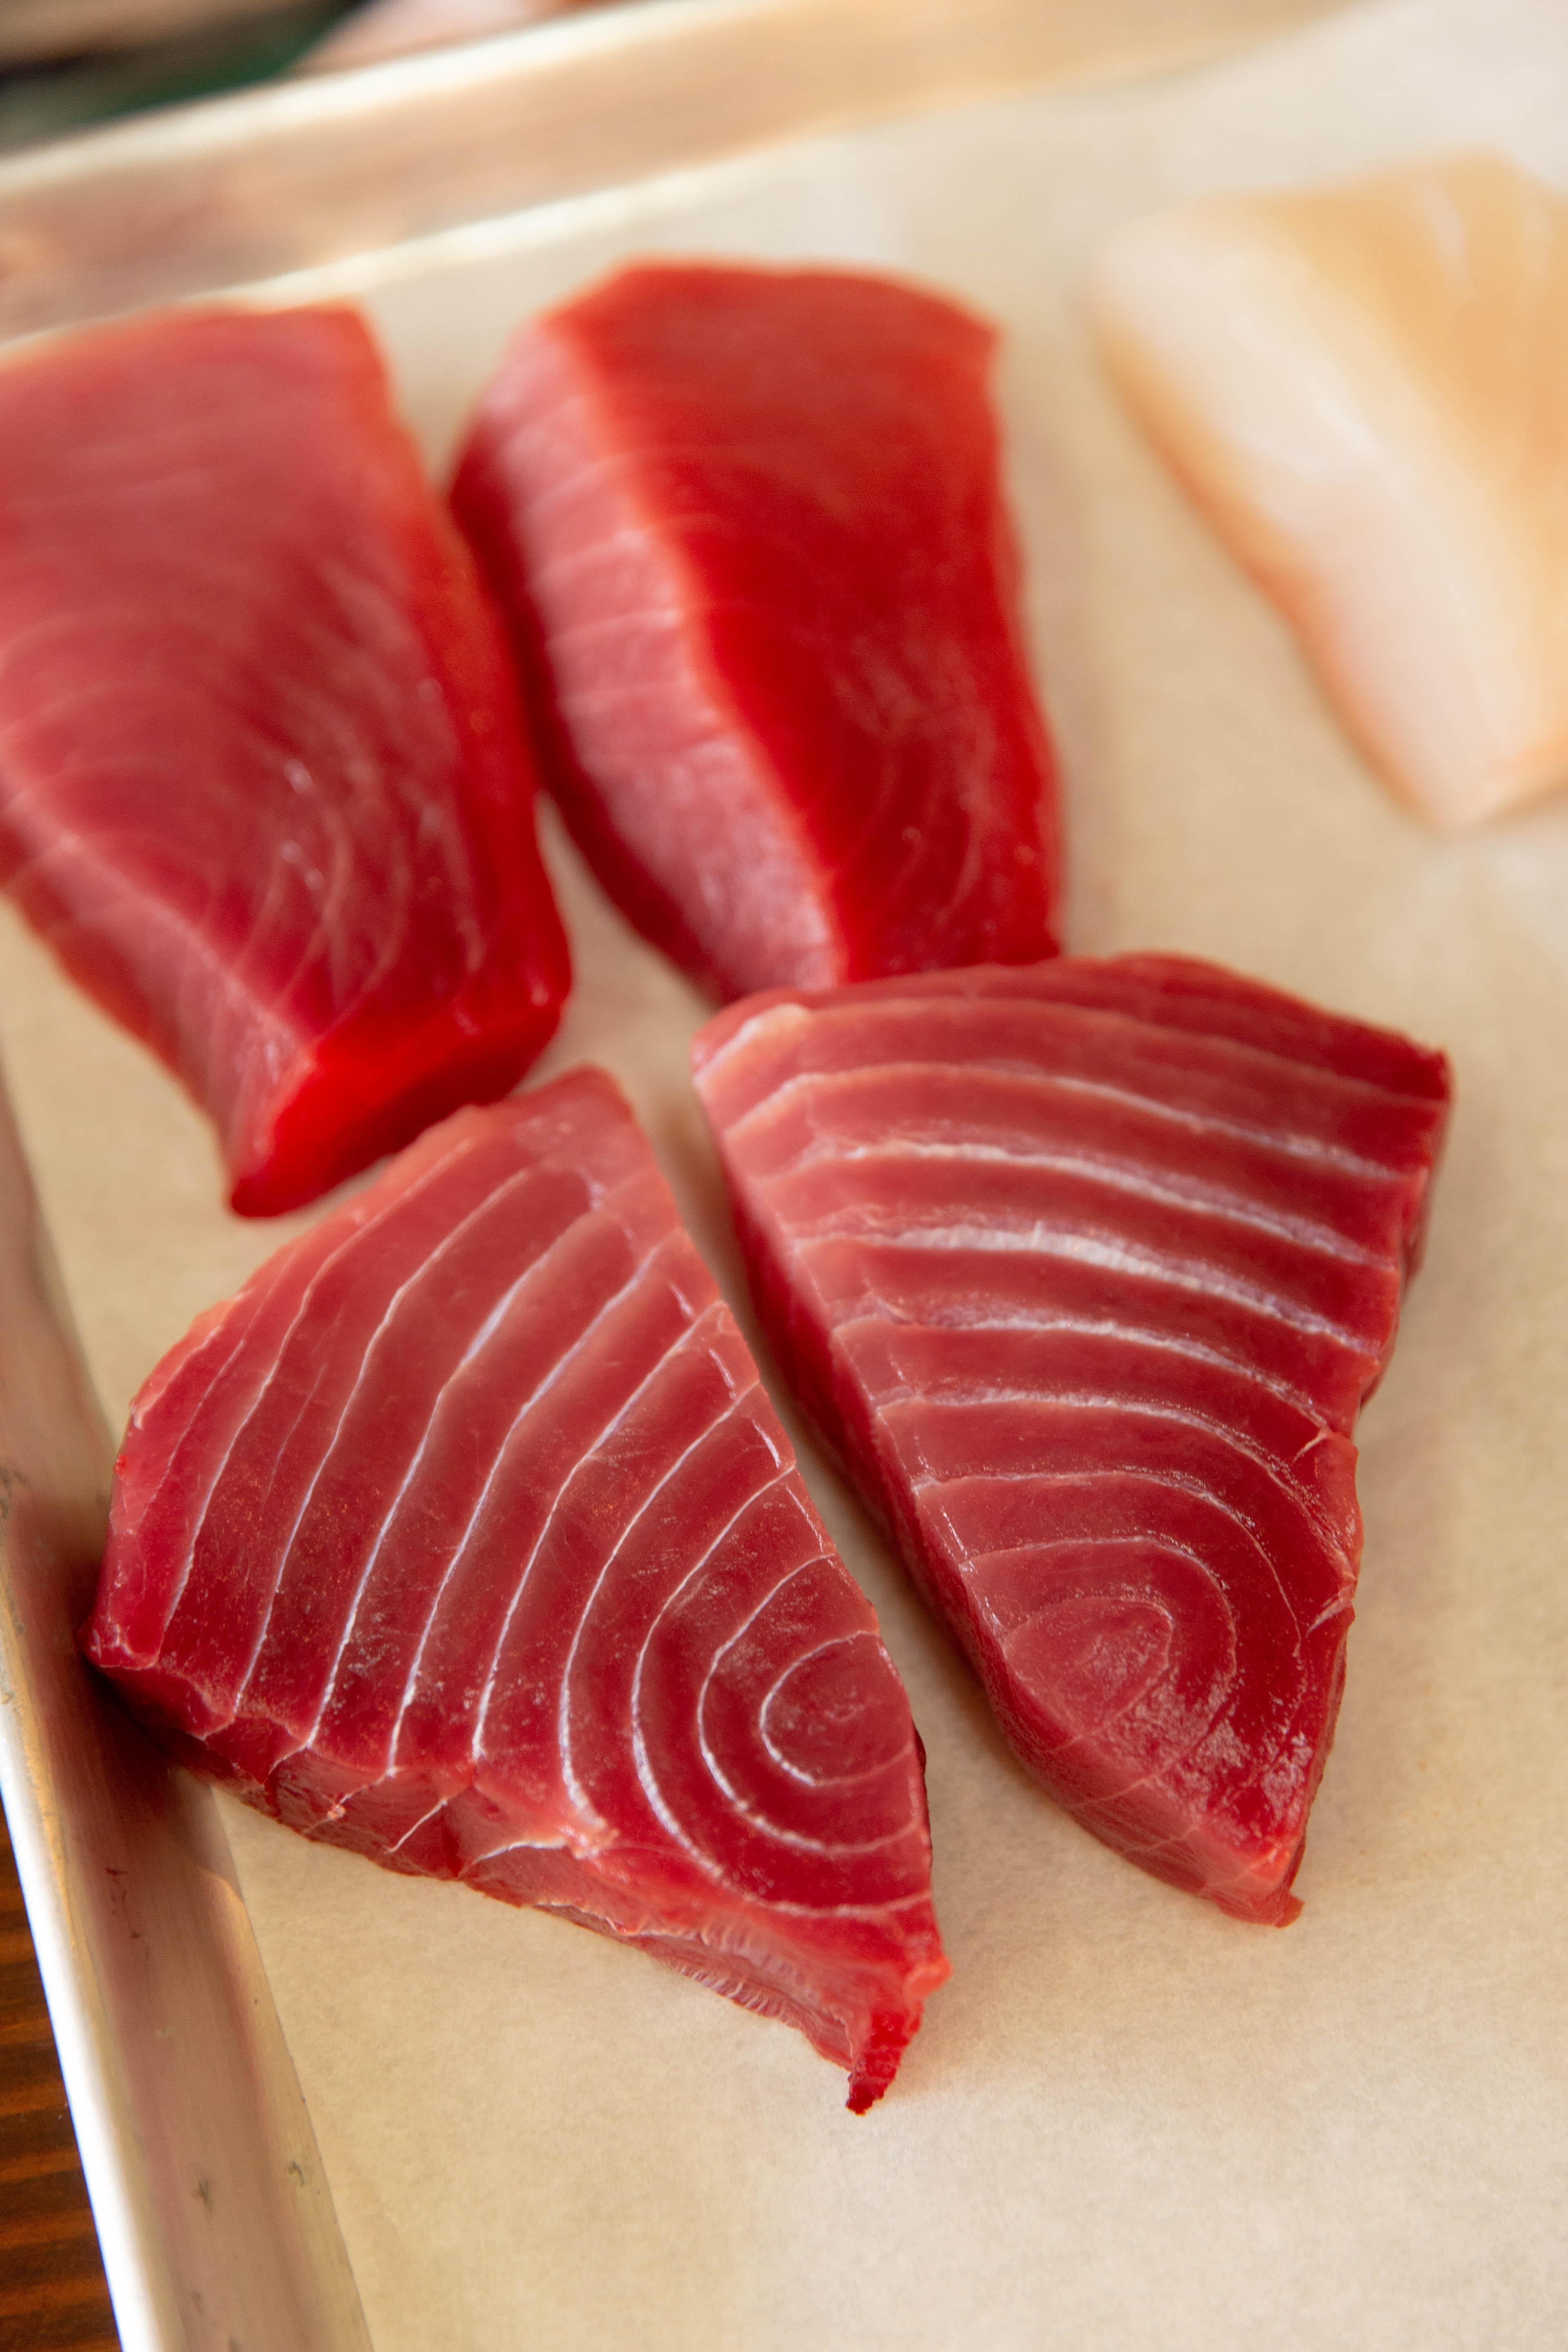 Yellowfin Tuna (7 oz)